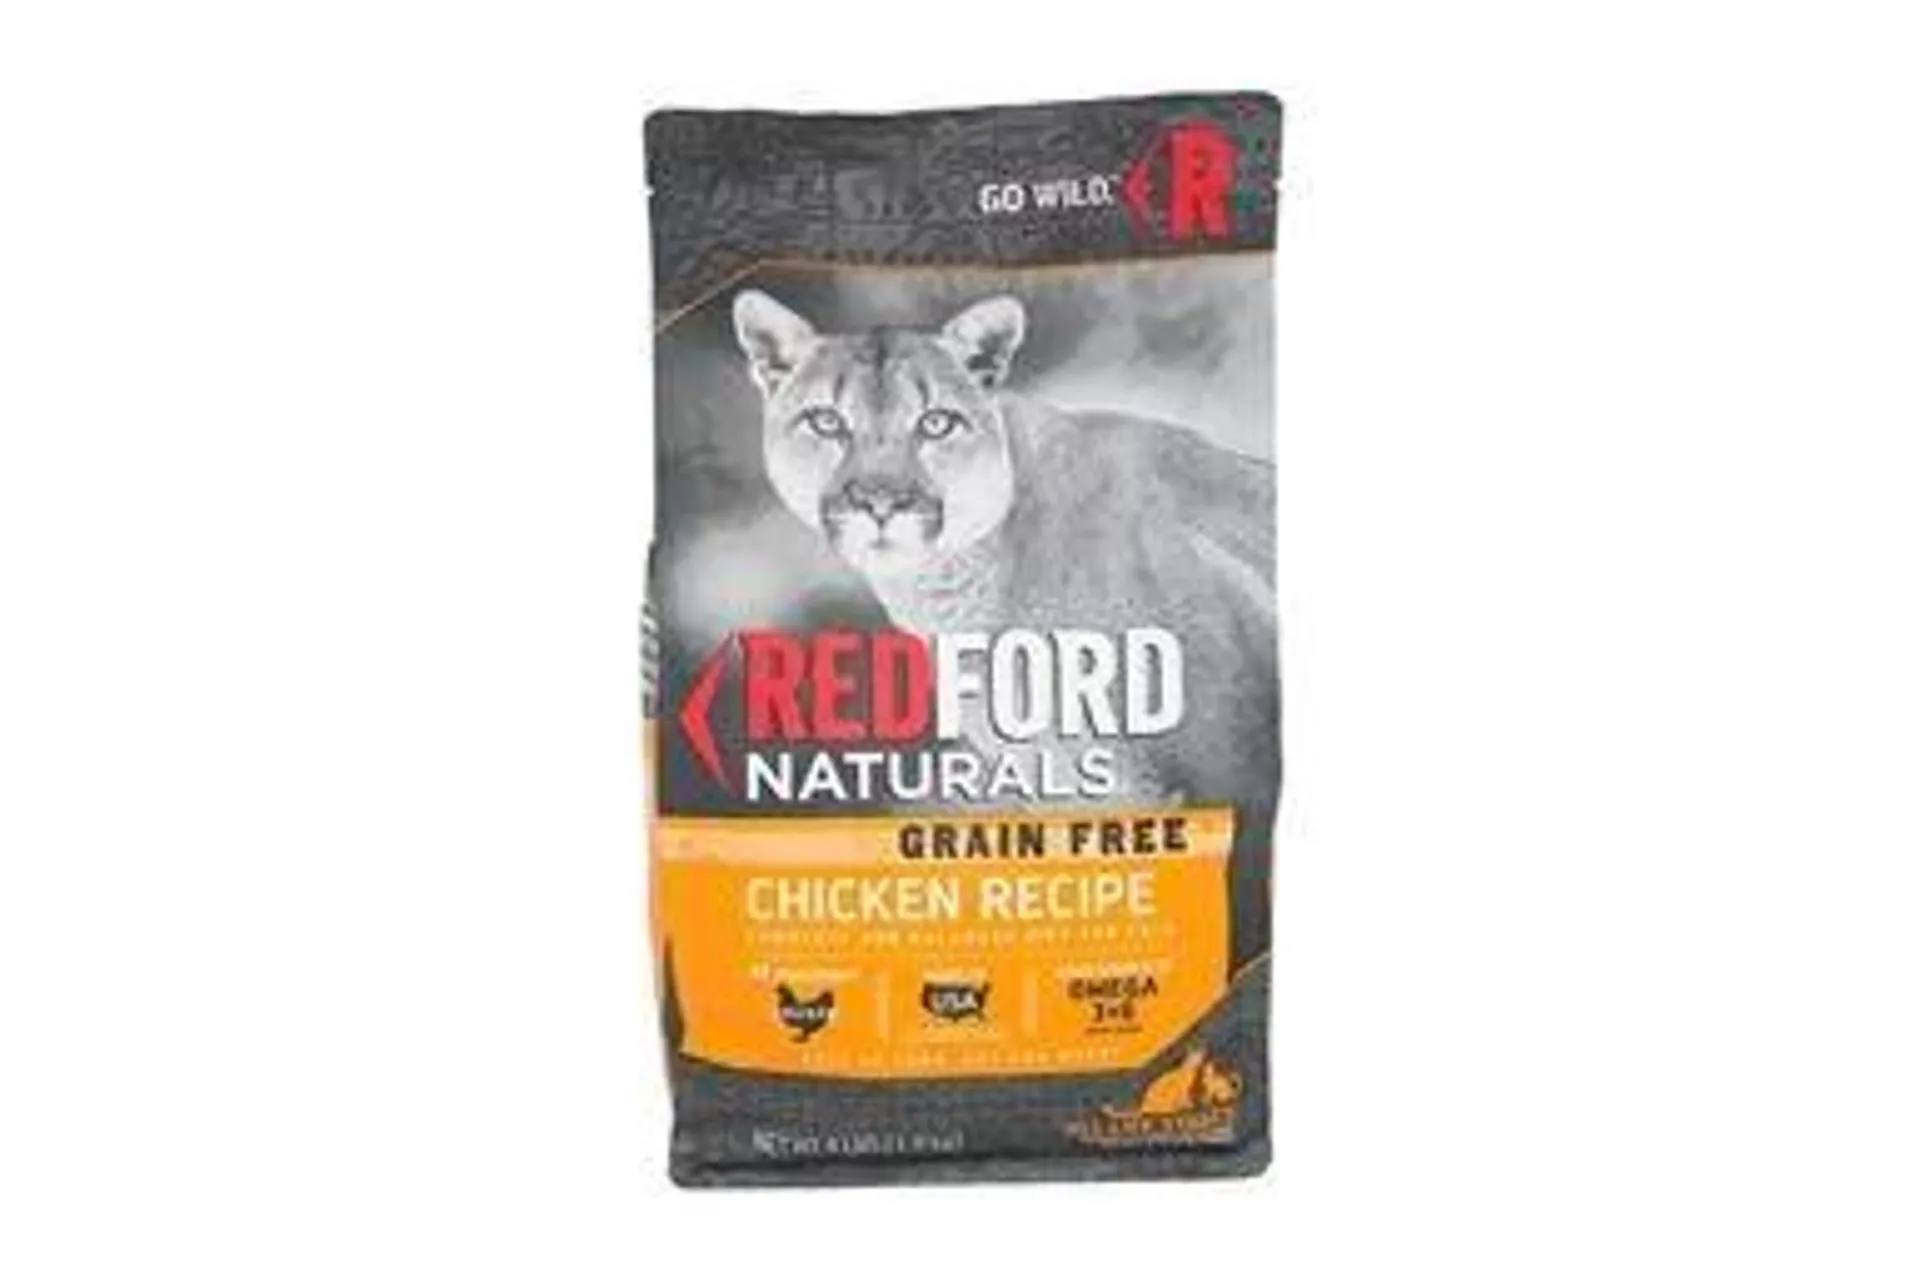 Redford Naturals Grain Free Chicken Recipe Cat Food, 4 Pounds